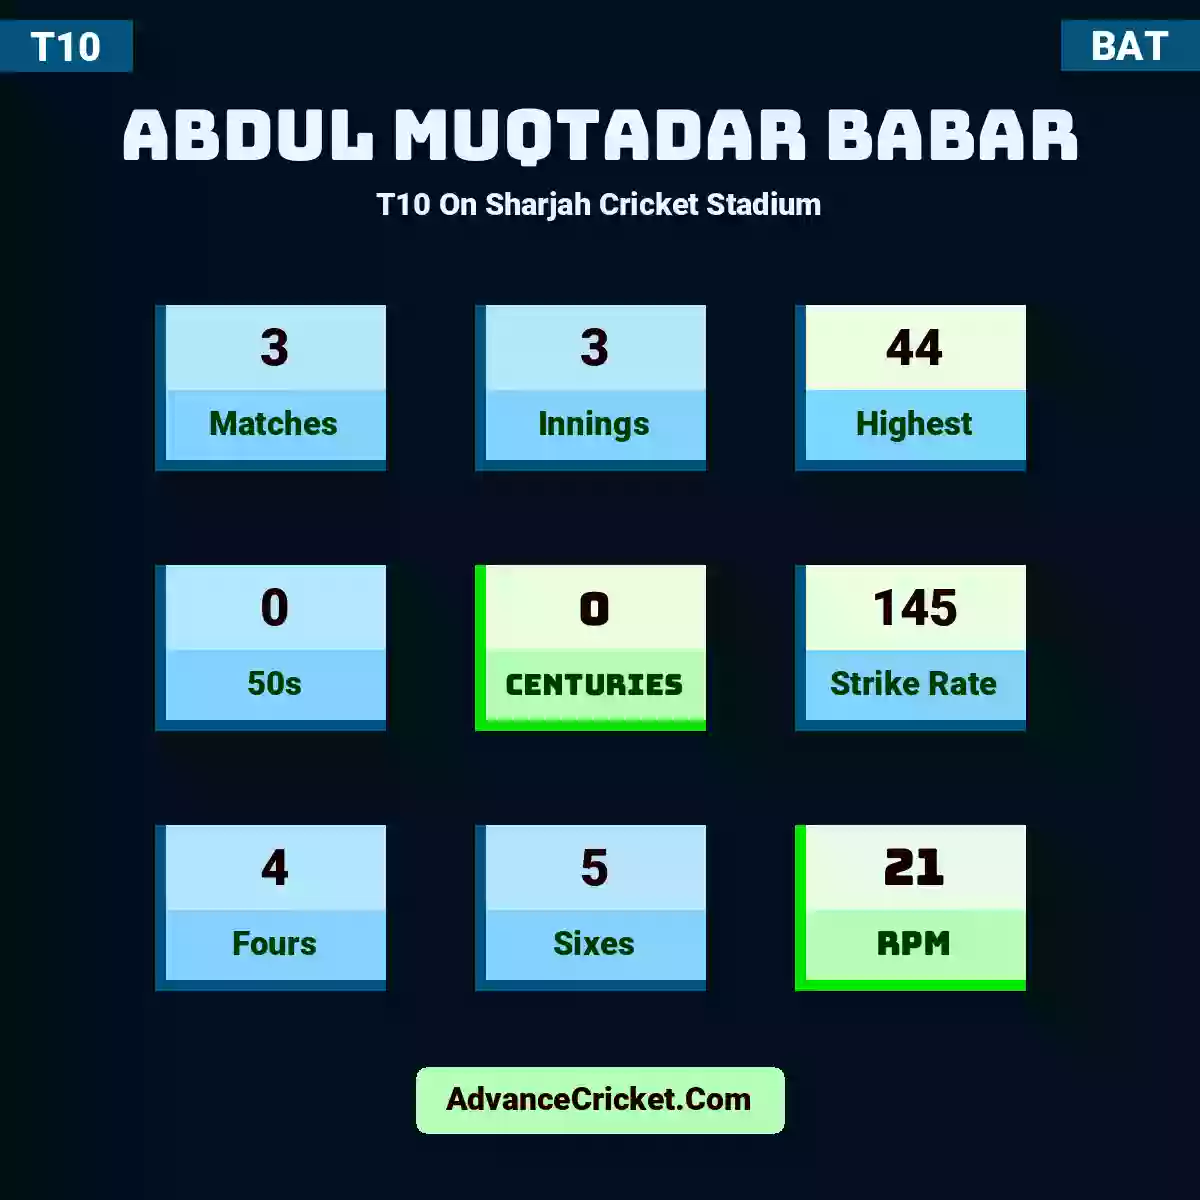 Abdul Muqtadar Babar T10  On Sharjah Cricket Stadium, Abdul Muqtadar Babar played 3 matches, scored 44 runs as highest, 0 half-centuries, and 0 centuries, with a strike rate of 145. A.Muqtadar.Babar hit 4 fours and 5 sixes, with an RPM of 21.